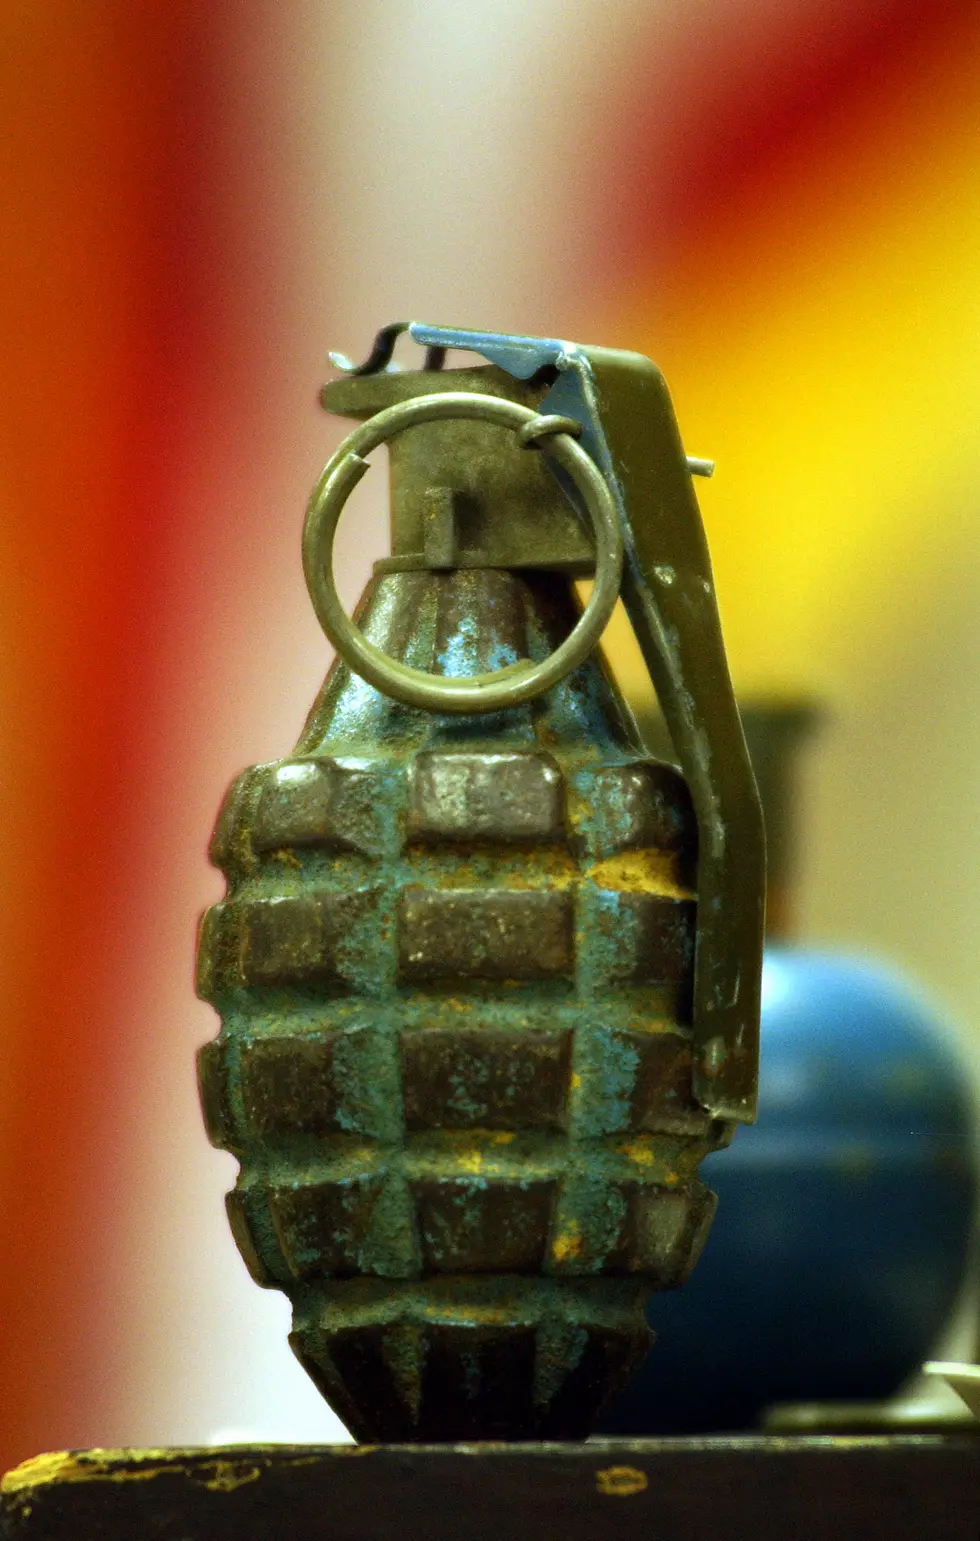 Hand Grenade Found in Orange County Home